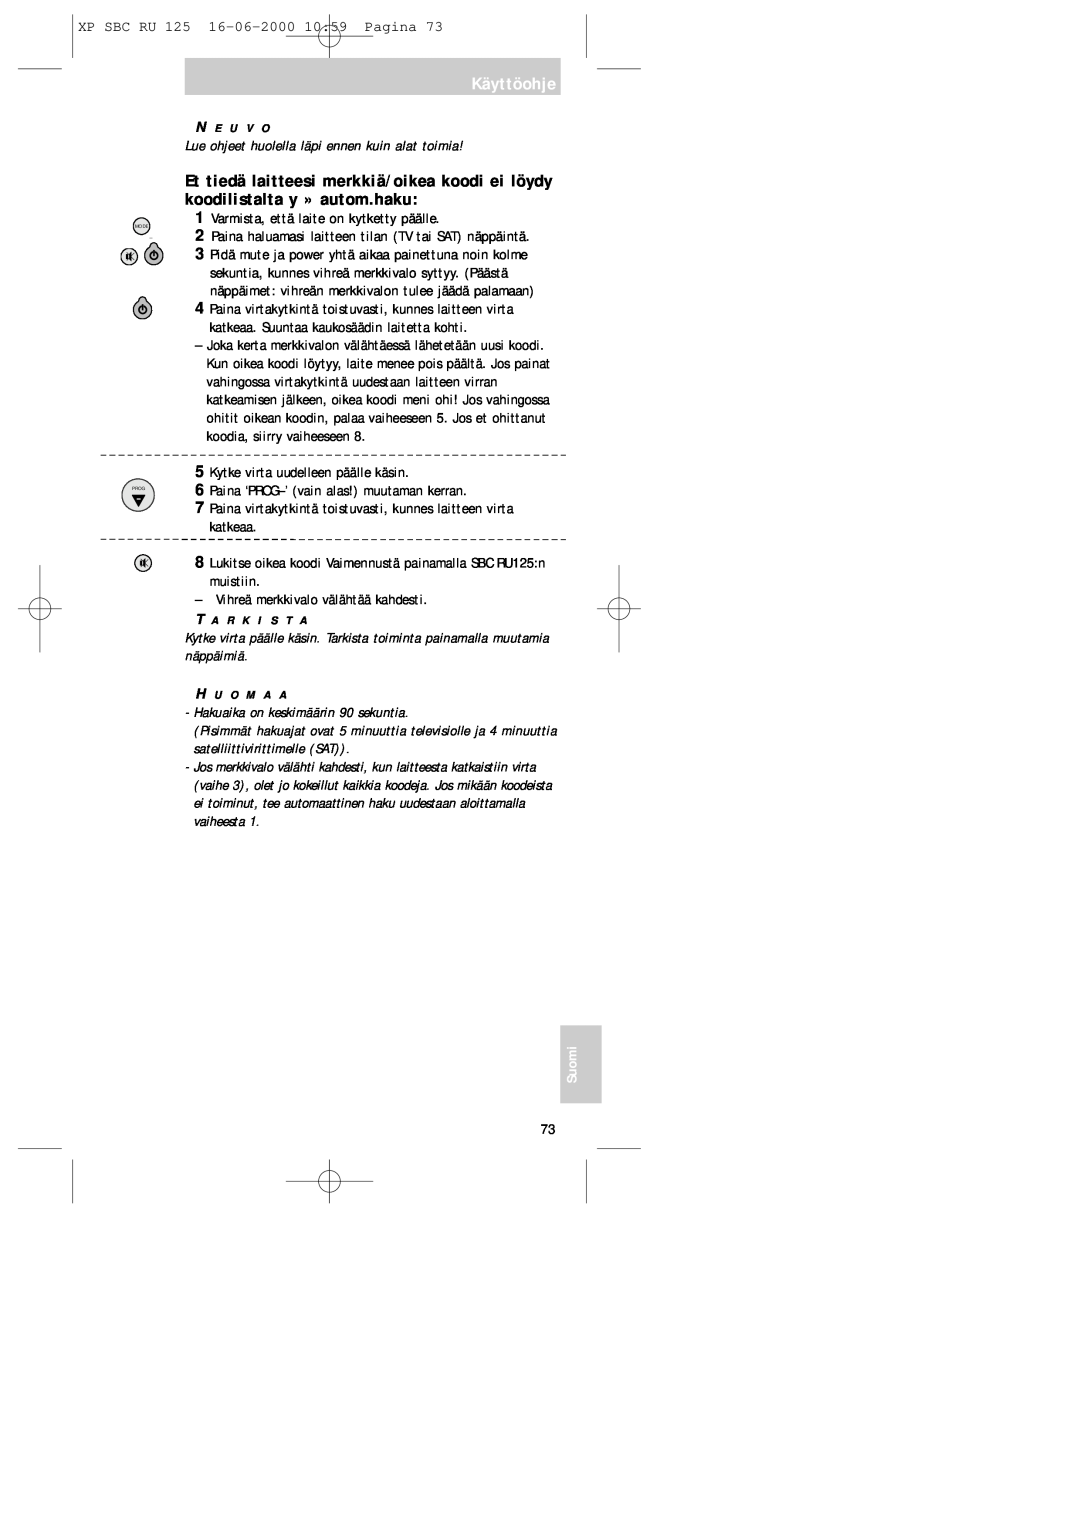 Philips RU125 manual XP SBC RU 125 16-06-200010 59 Pagina, Käyttöohje, Suomi, N E U V O, T A R K I S T A, H U O M A A 